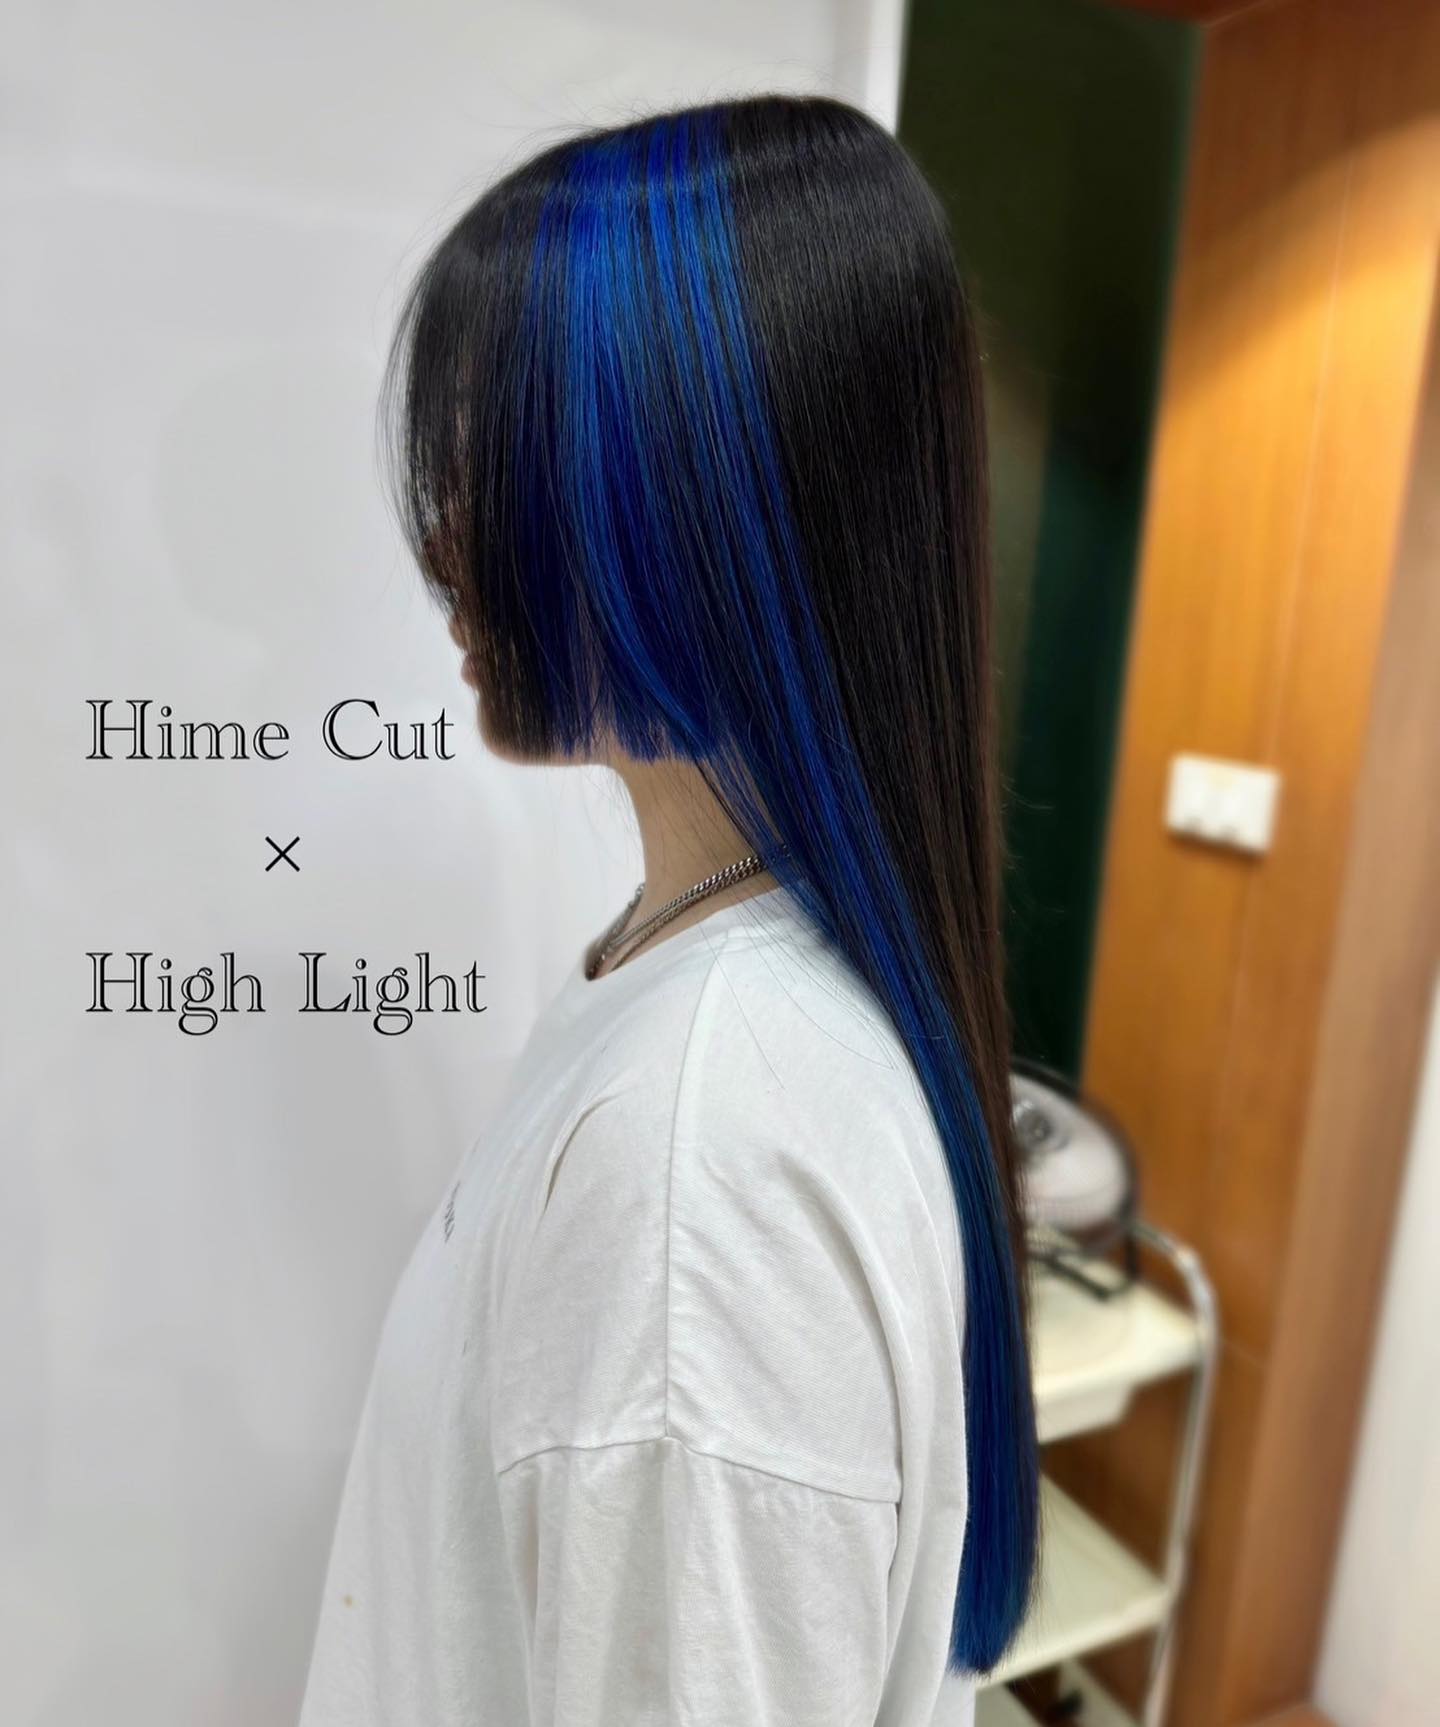 🖤Hime Cut × Blue High light 🖤

Cute and cool 😎 

＊Bleach 3 times and then apply color.

…………………………
ร้าน Hair Room Sora 299/7 ชั้น1, Sukhumvit Living Town, ซอยสุขุมวิท21(อโศก)
 02-169-1622
 Line : @575zzlqc (มี @)
** บัตรเครดิตขั้นต่ำ 2000 บาท **
#Hairroomsora #Hairroomsorabangkok #🤖 #Hairstyle #sukhumvit21 #Japanesesalon #DigitalPerm #バンコク美容院 #ヘアールームソラ #head spa bangkok #fashioncolor #ร้านซาลอนญี่ปุ่น #ซาลอน #ทำผมรับปริญญา #ทำผมออกงาน #รับทำผม #ดัดดิจิตอล #ยืดผม #ย้อมผม #Repost